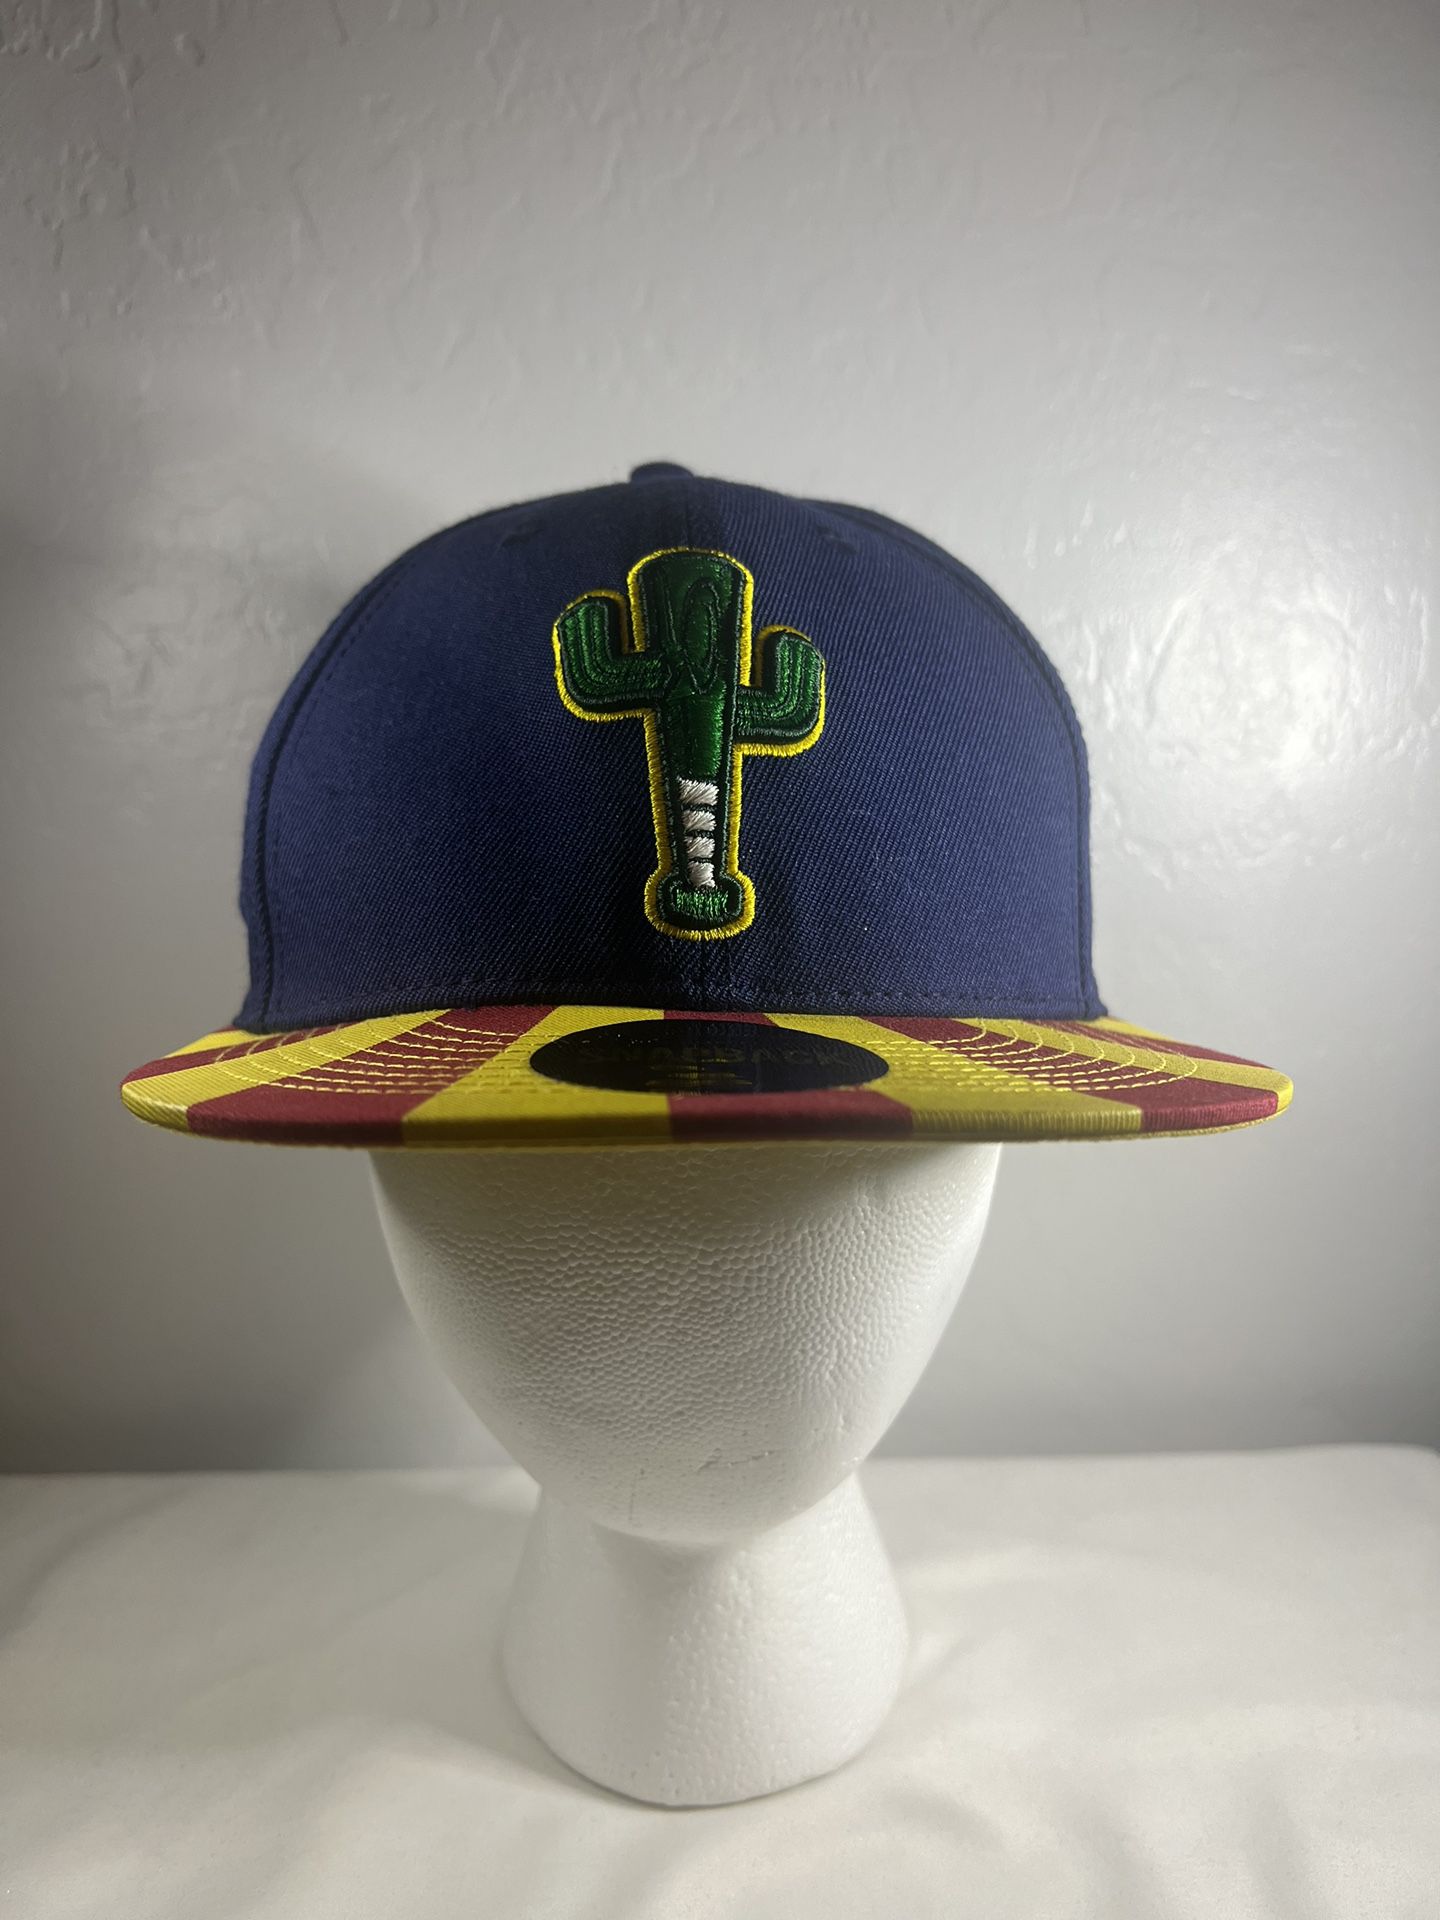 Baseballism Arizona Cactus SnapBack Men's Hat Baseball MLB 1/500 Limited Edition